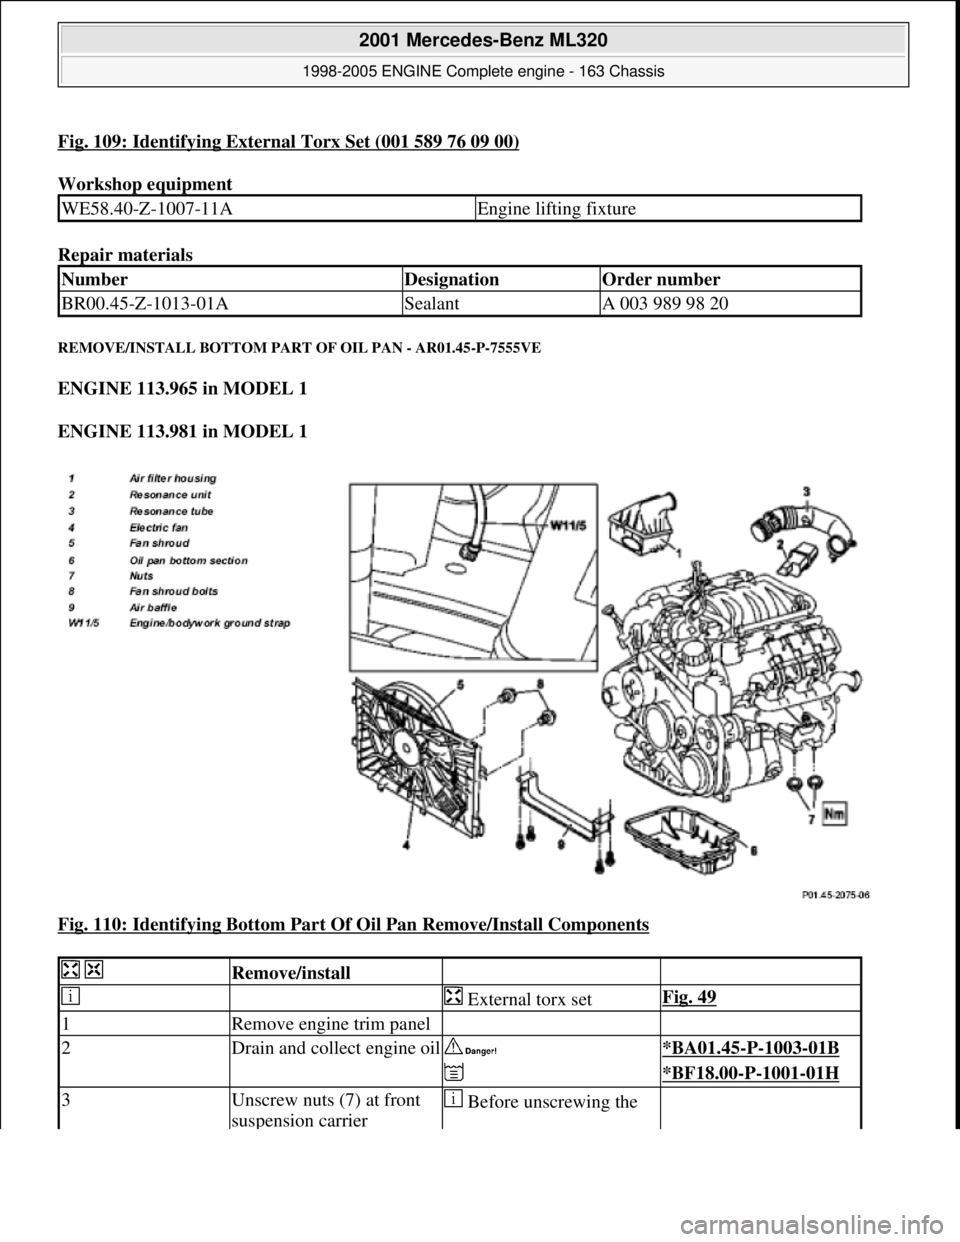 MERCEDES-BENZ ML350 1997  Complete Repair Manual Fig. 109: Identifying External Torx Set (001 589 76 09 00)
Workshop equipment   
Repair materials   
REMOVE/INSTALL BOTTOM PART  OF OIL PAN - AR01.45-P-7555VE 
ENGINE 113.965 in MODEL 1   
ENGINE 113.